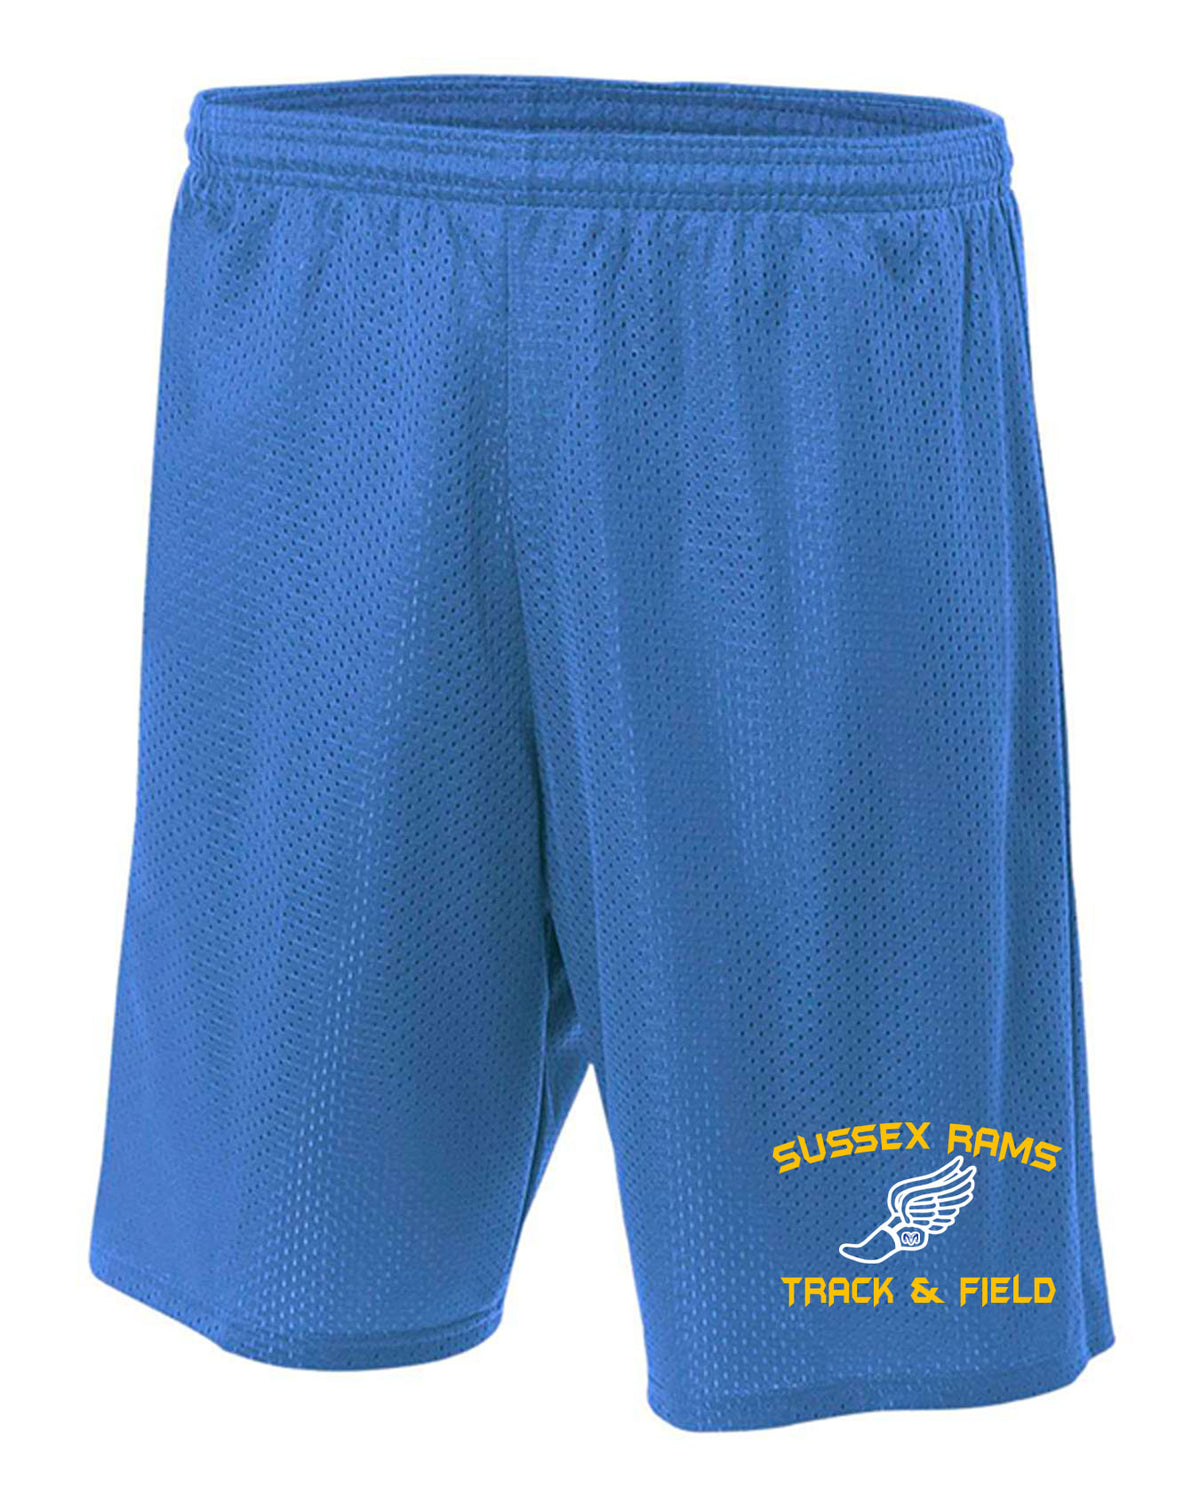 Sussex Rams Track Mesh Shorts Design 2